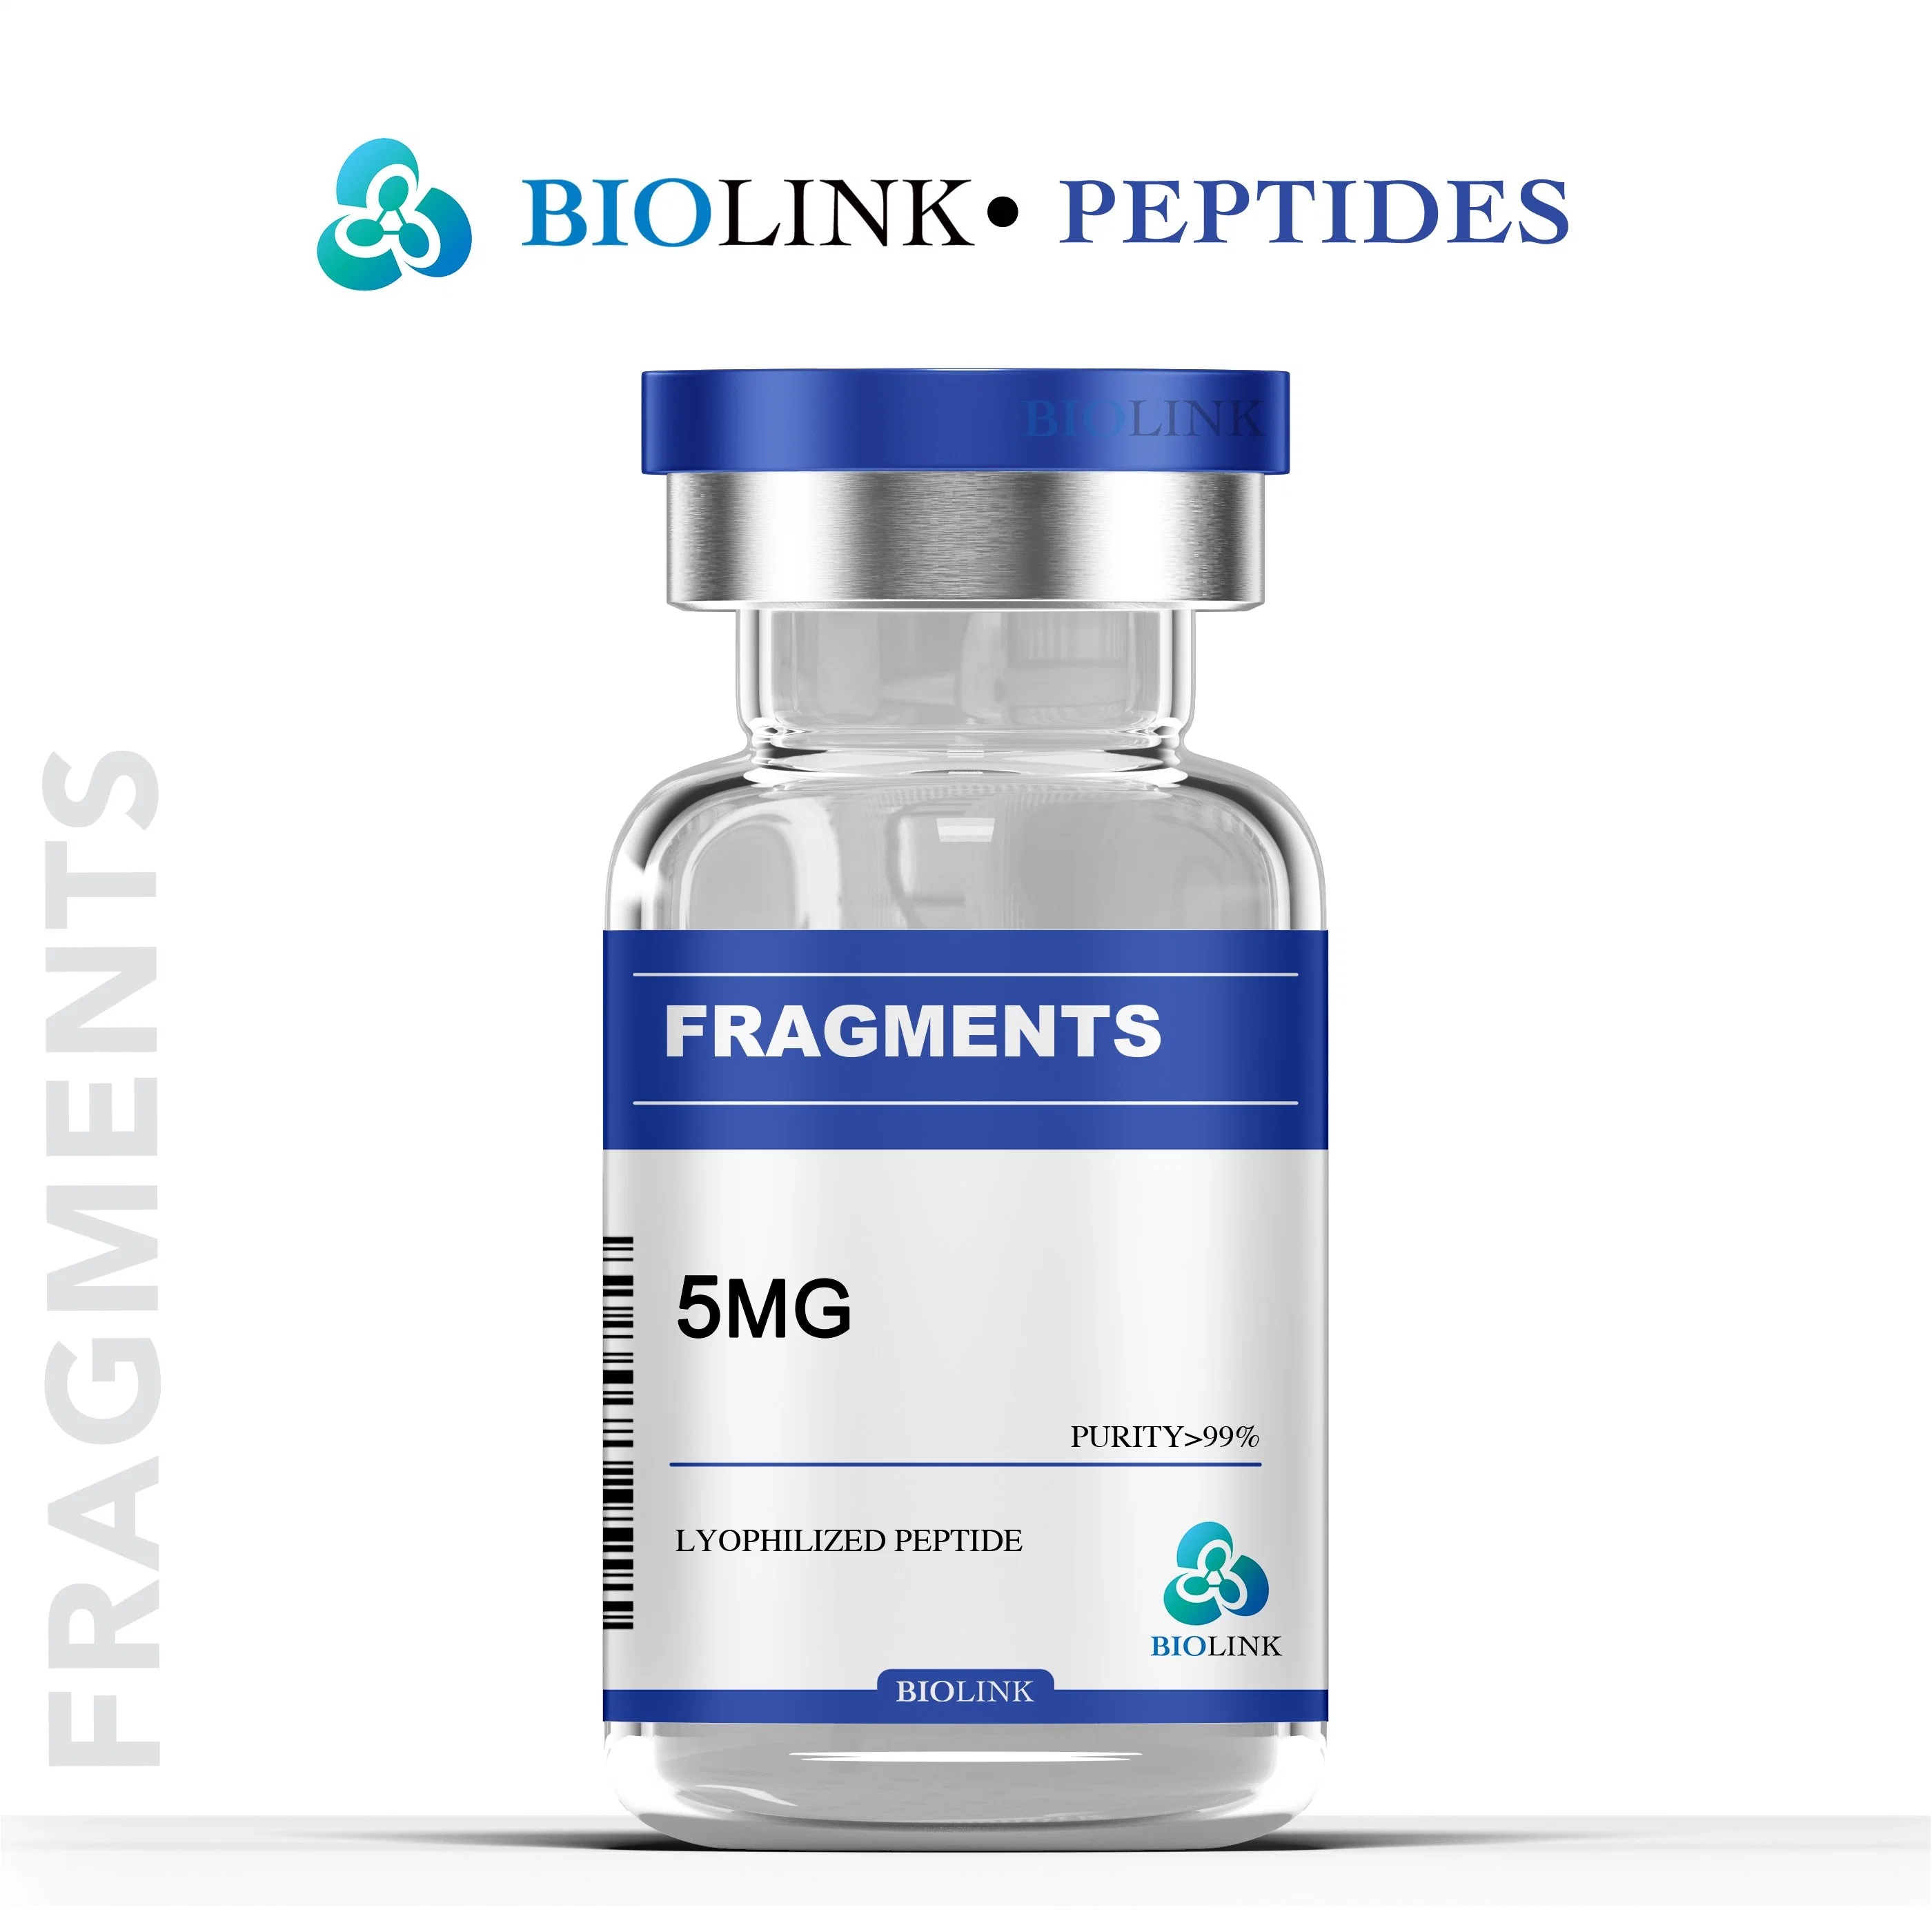 Пептиды Biolink пептиды Fragment Human Hormone пептиды 5 мг/флаконы UK Warehouse